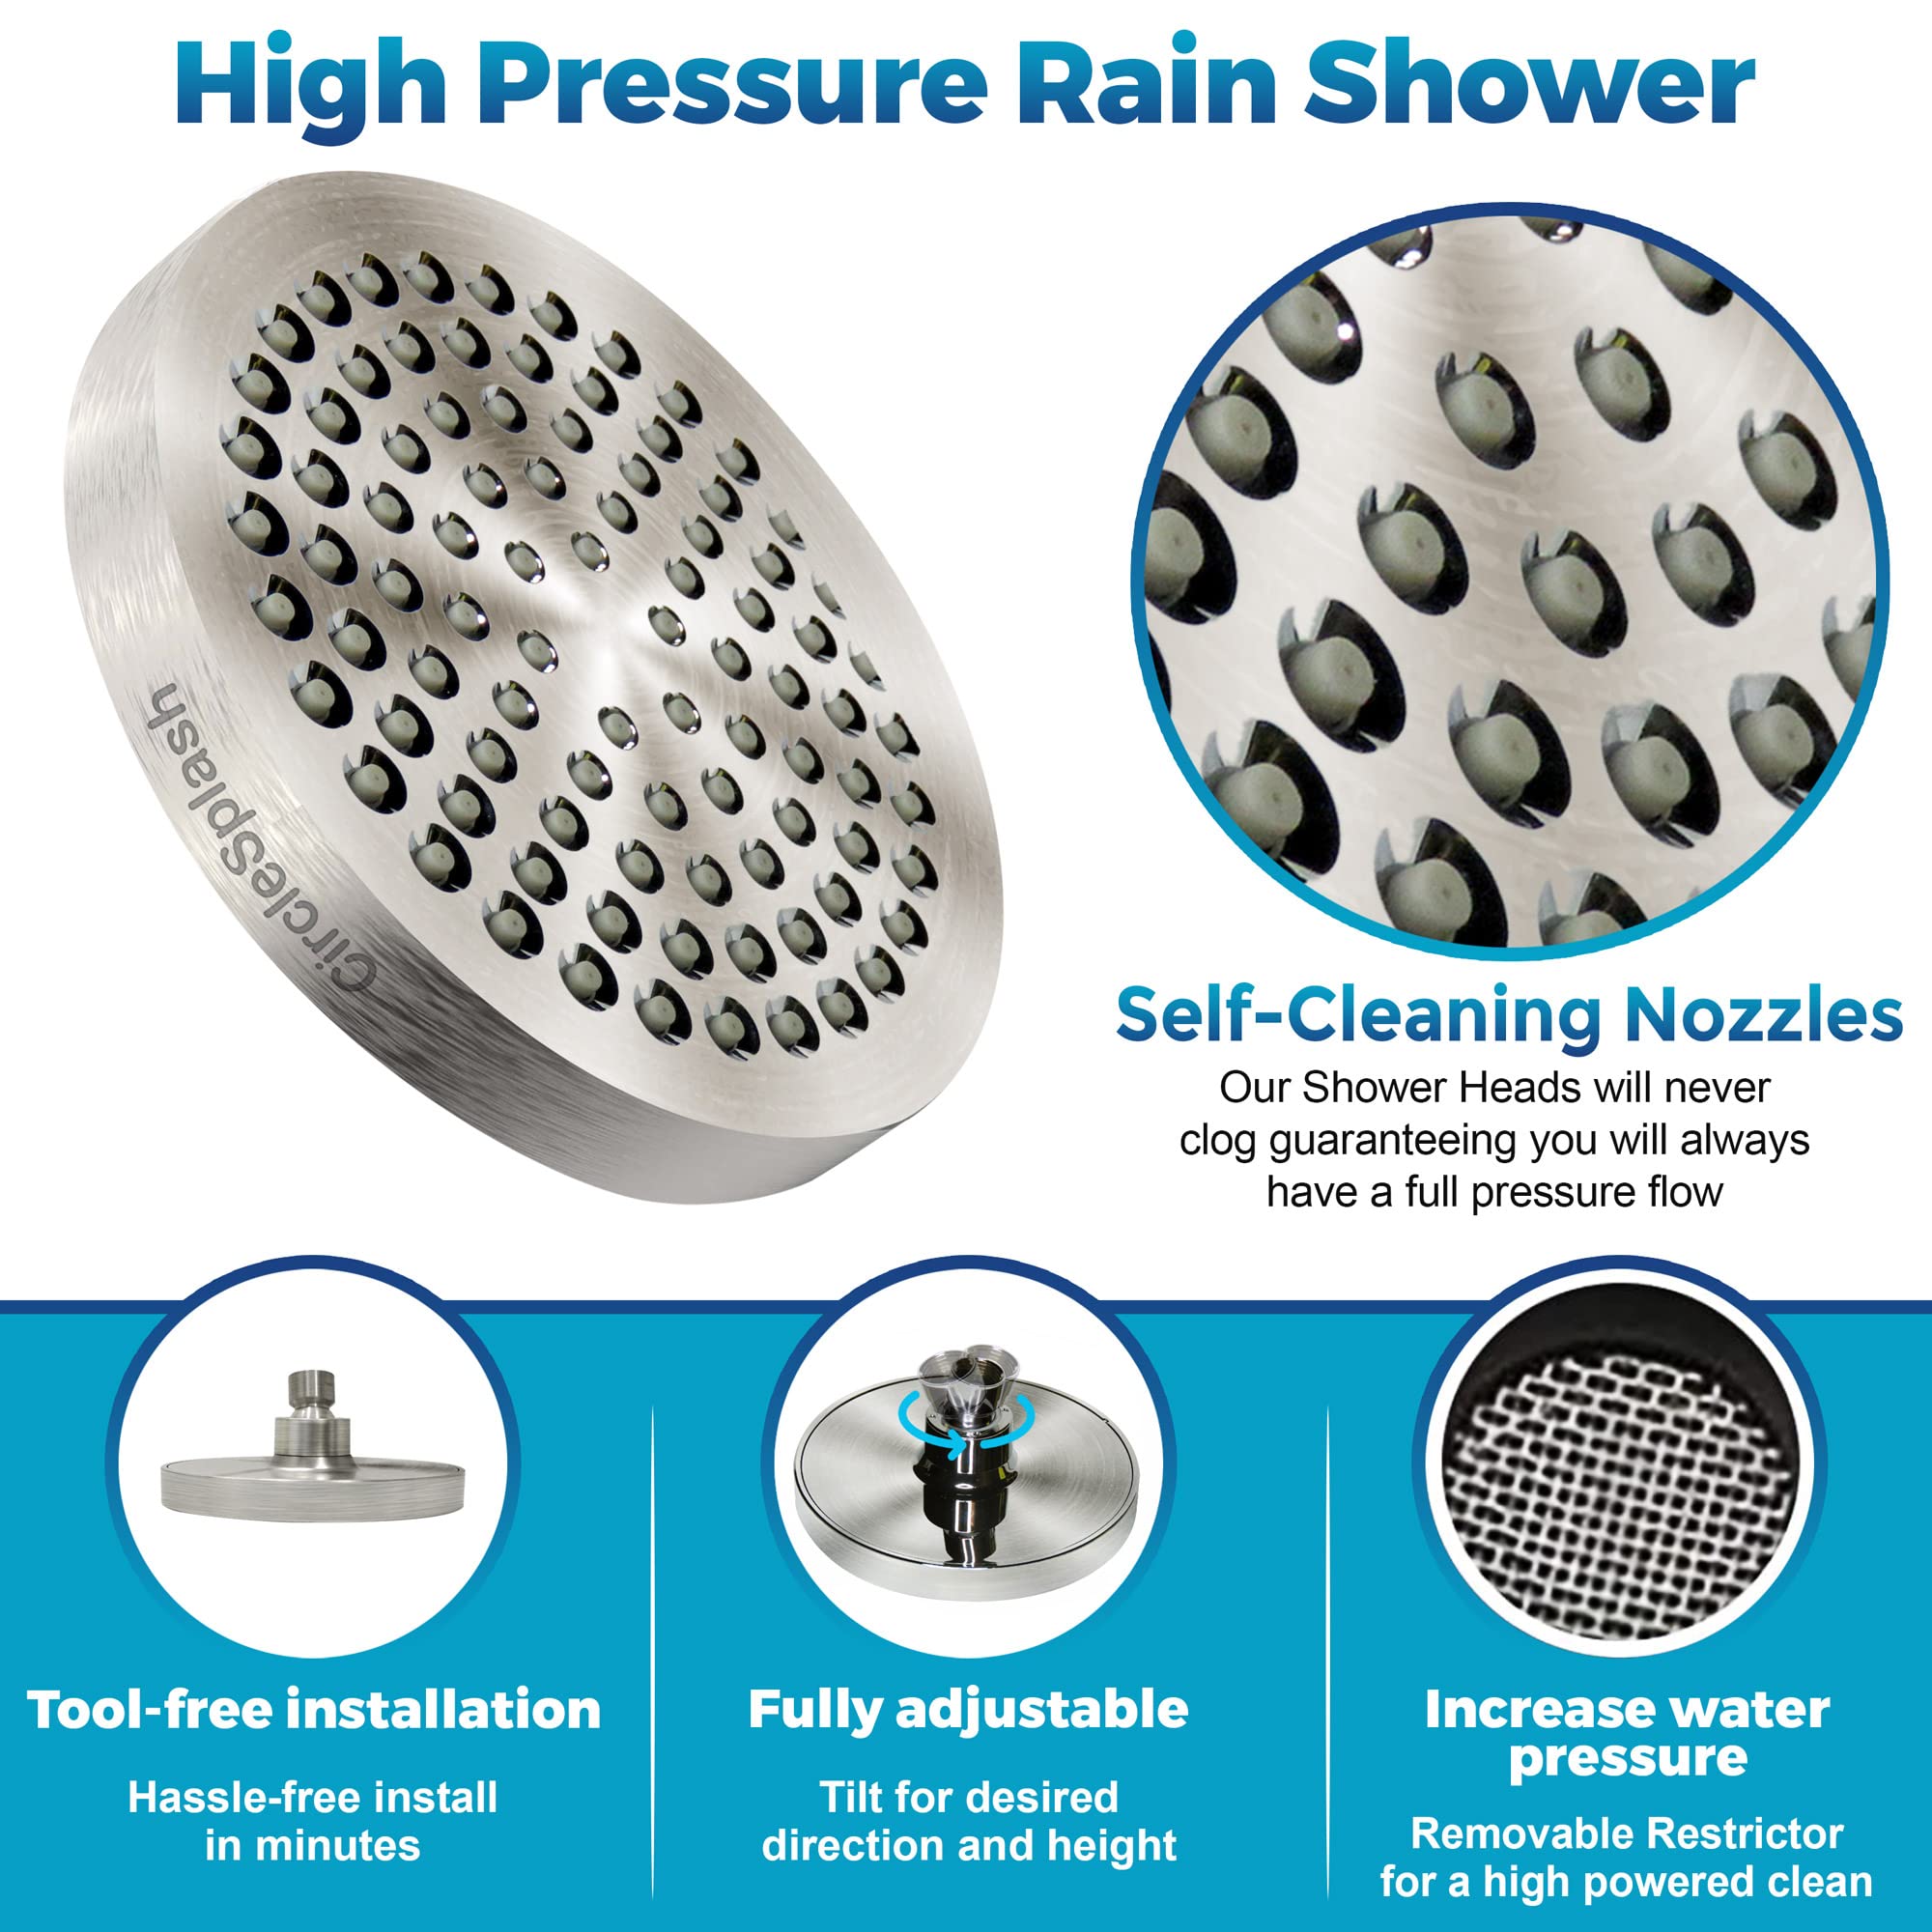 CIRCLESPLASH Shower Head - High Pressure Rain Booster - Anti Clog Self Cleaning Adjustable Showerhead - Tool-less 1 min Install - Universal Replacement Brushed Nickel - Rainfall 6 inch